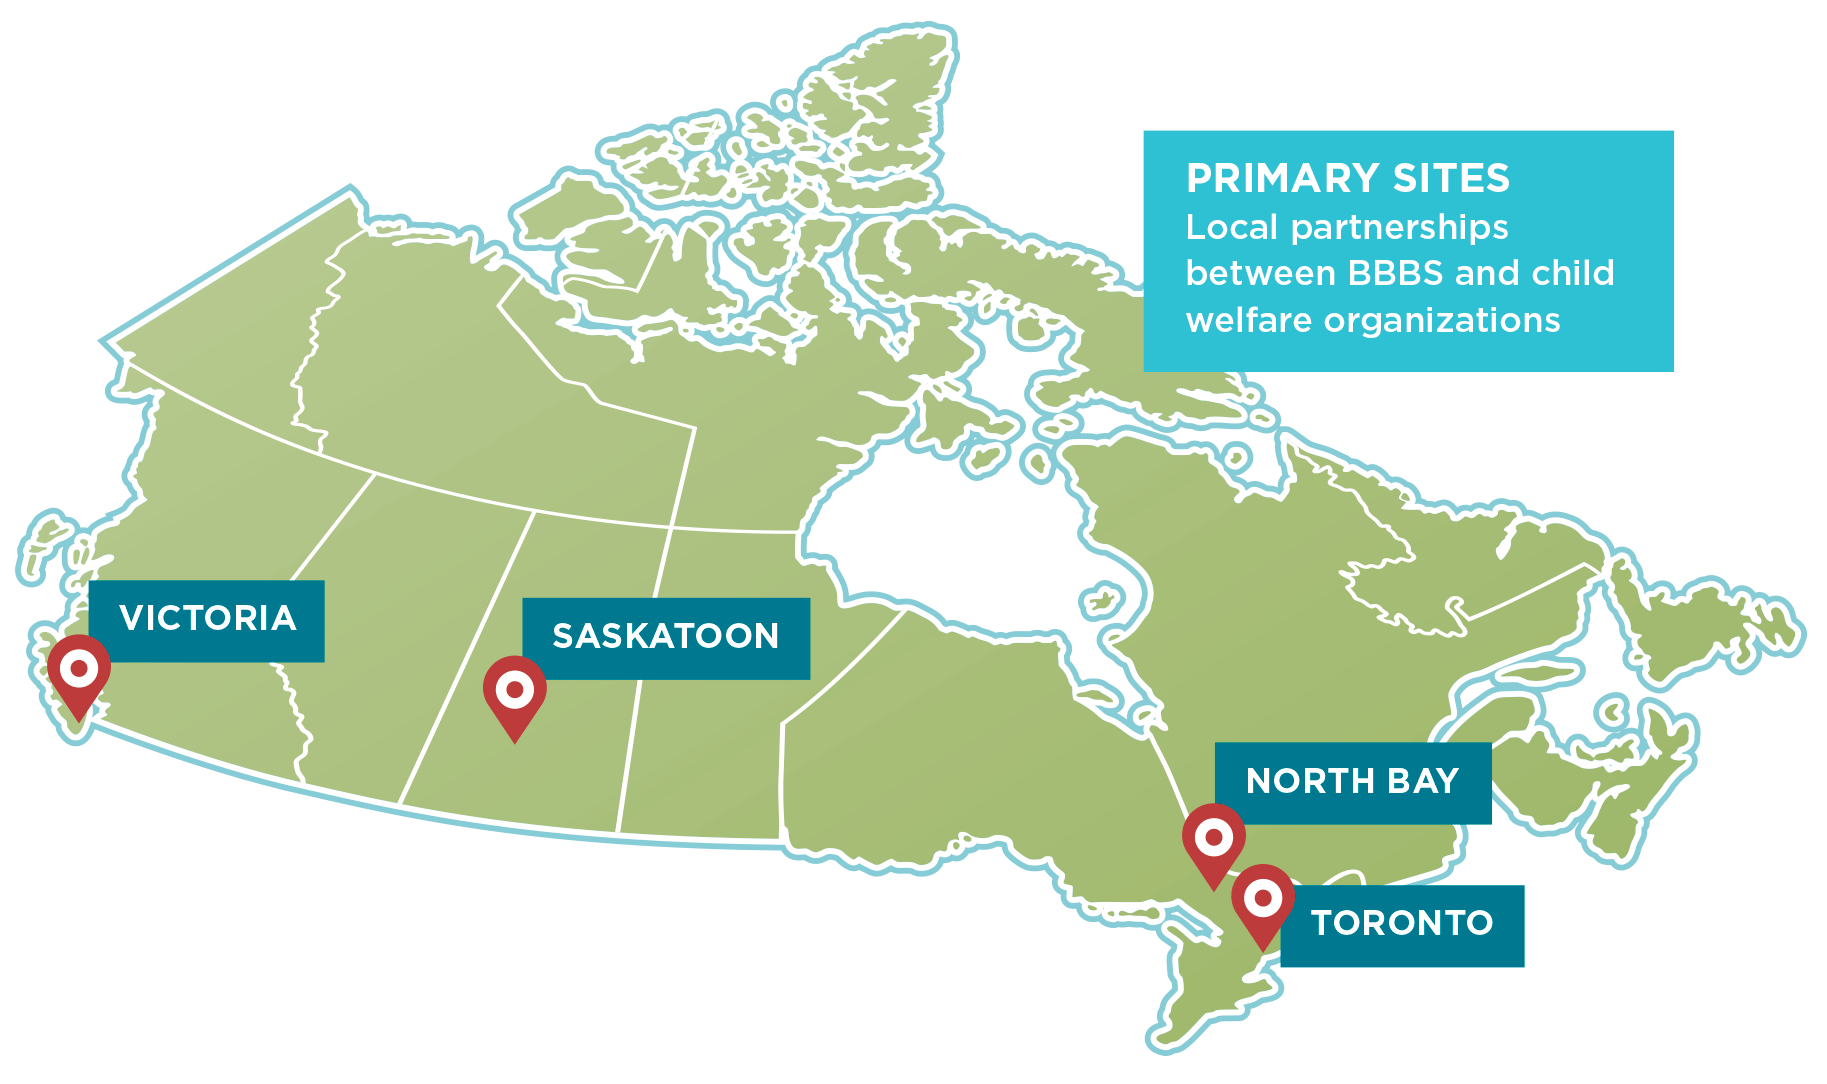 Primary Sites - Local partnerships between BBBS and child welfare organizations - Victoria, Saskatoon, North Bay & Toronto